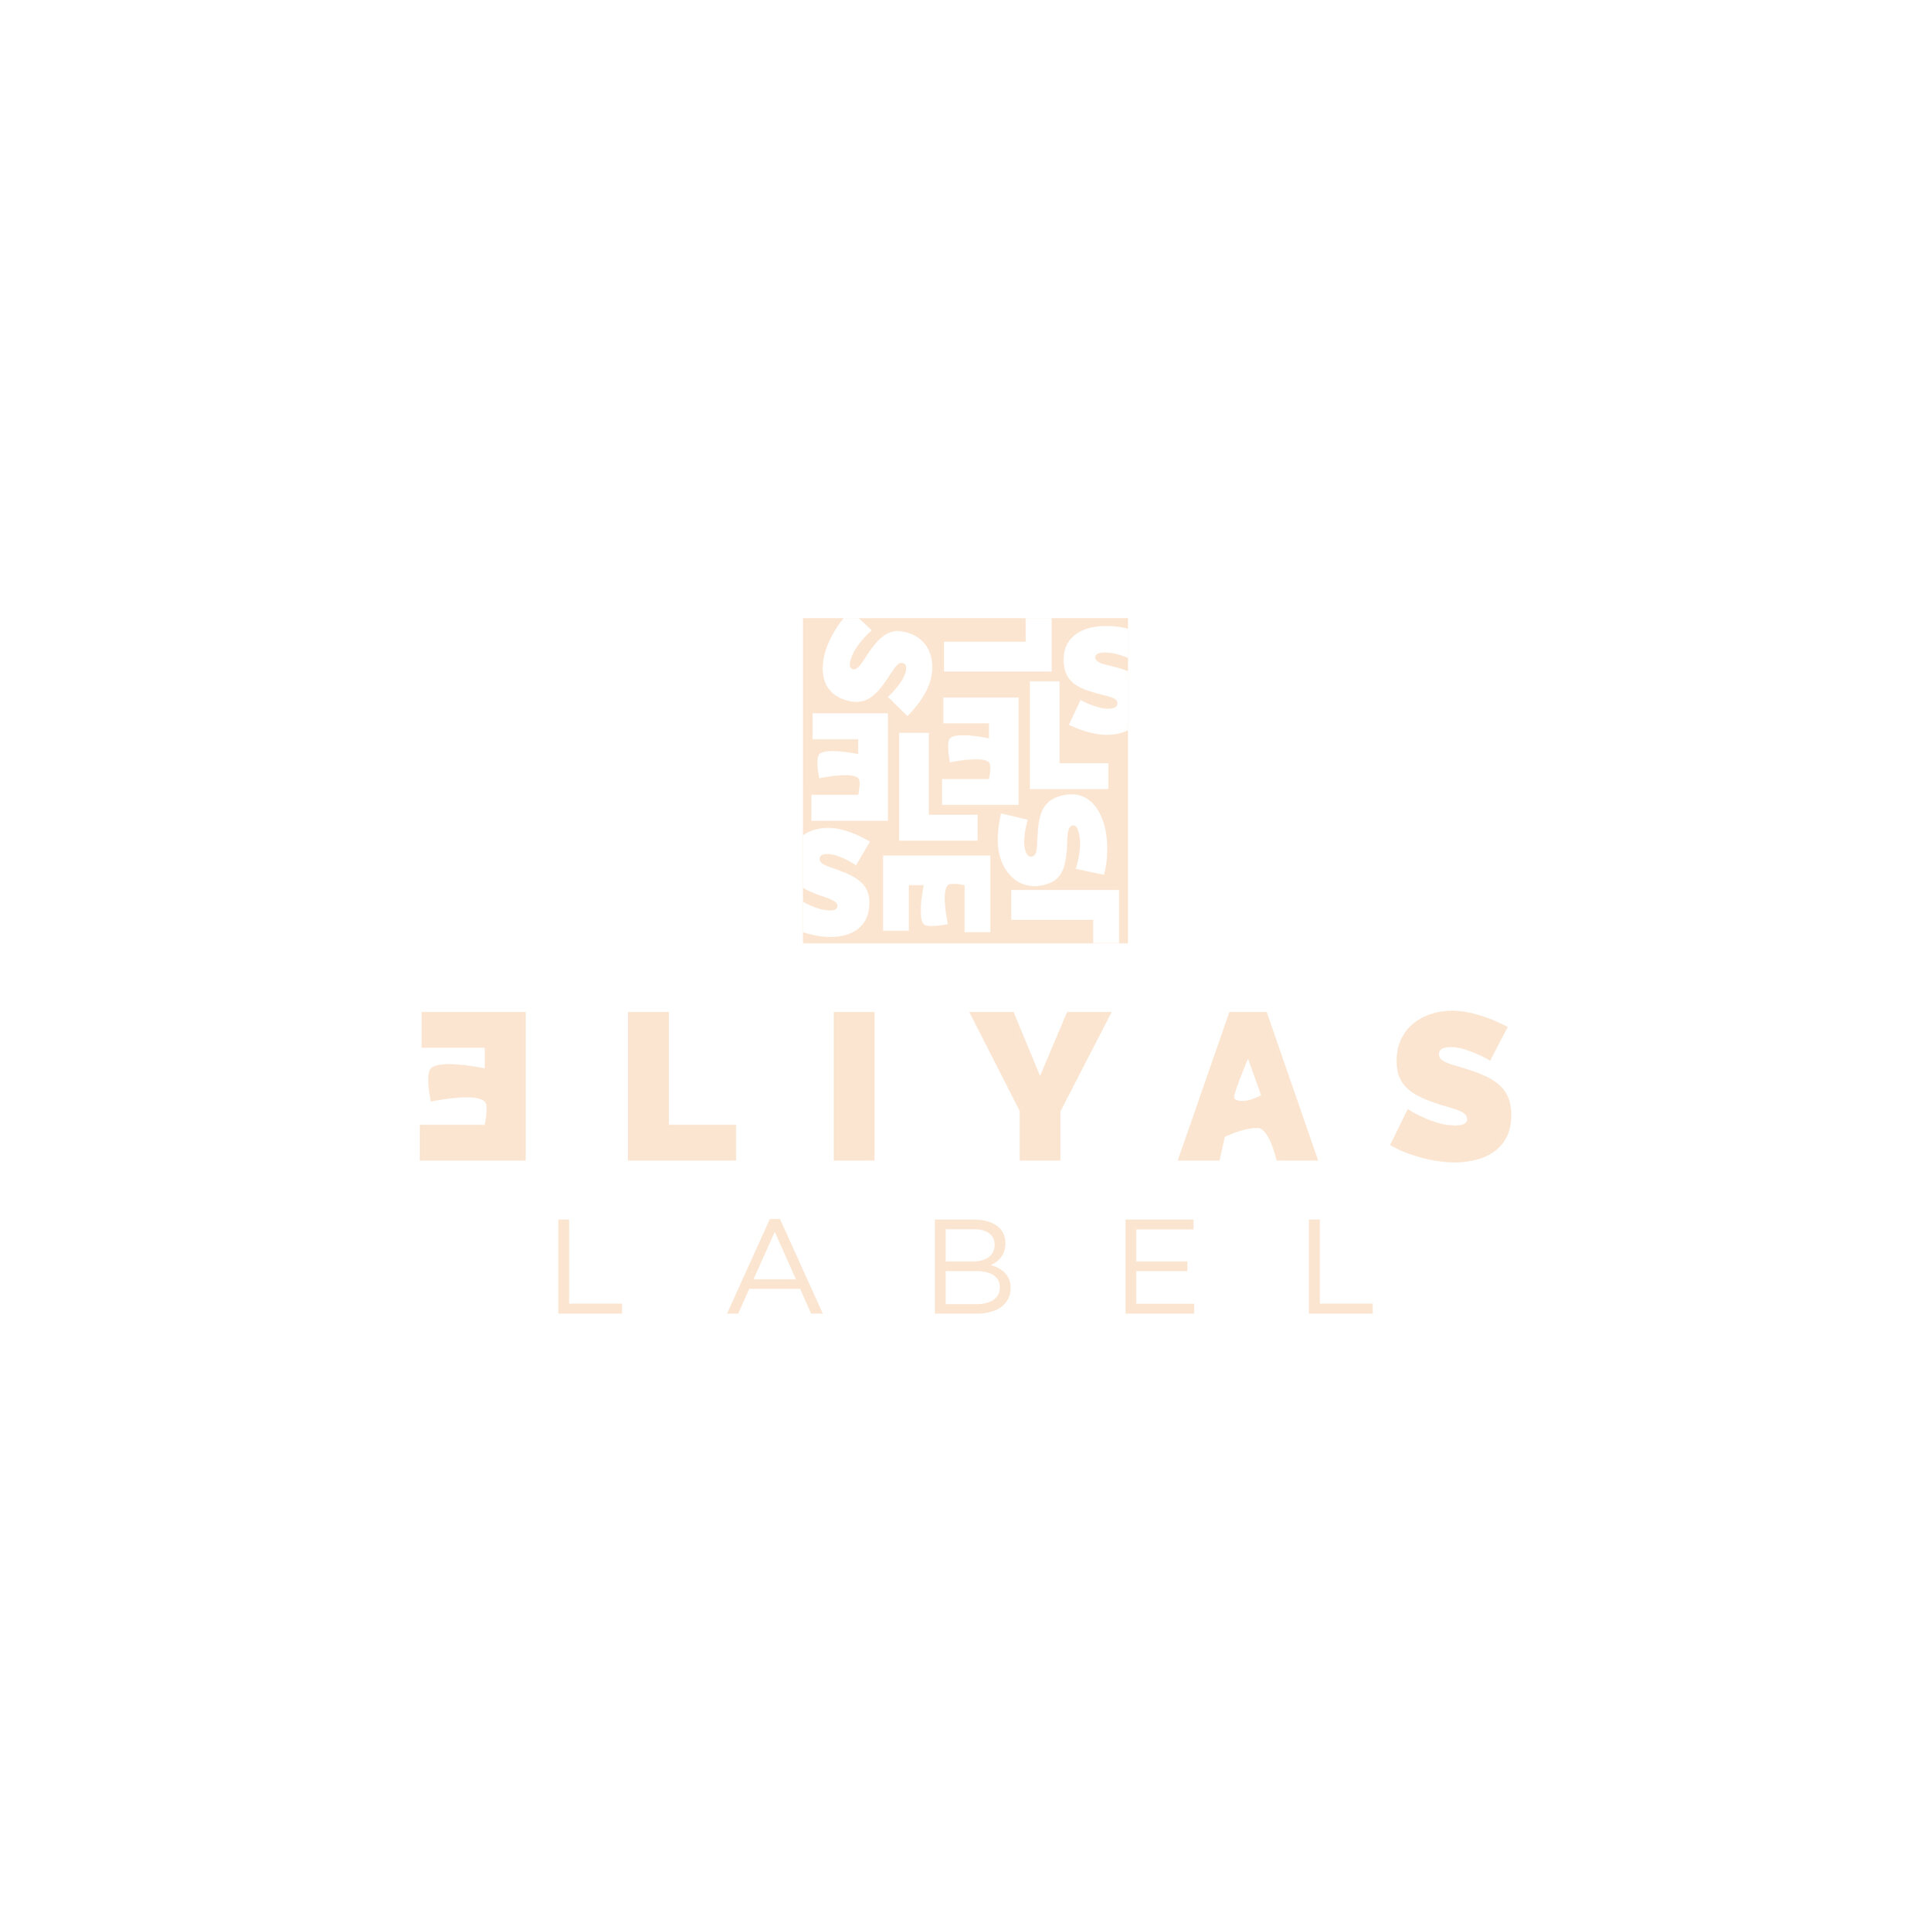 Eliyas_Logo-06.jpg